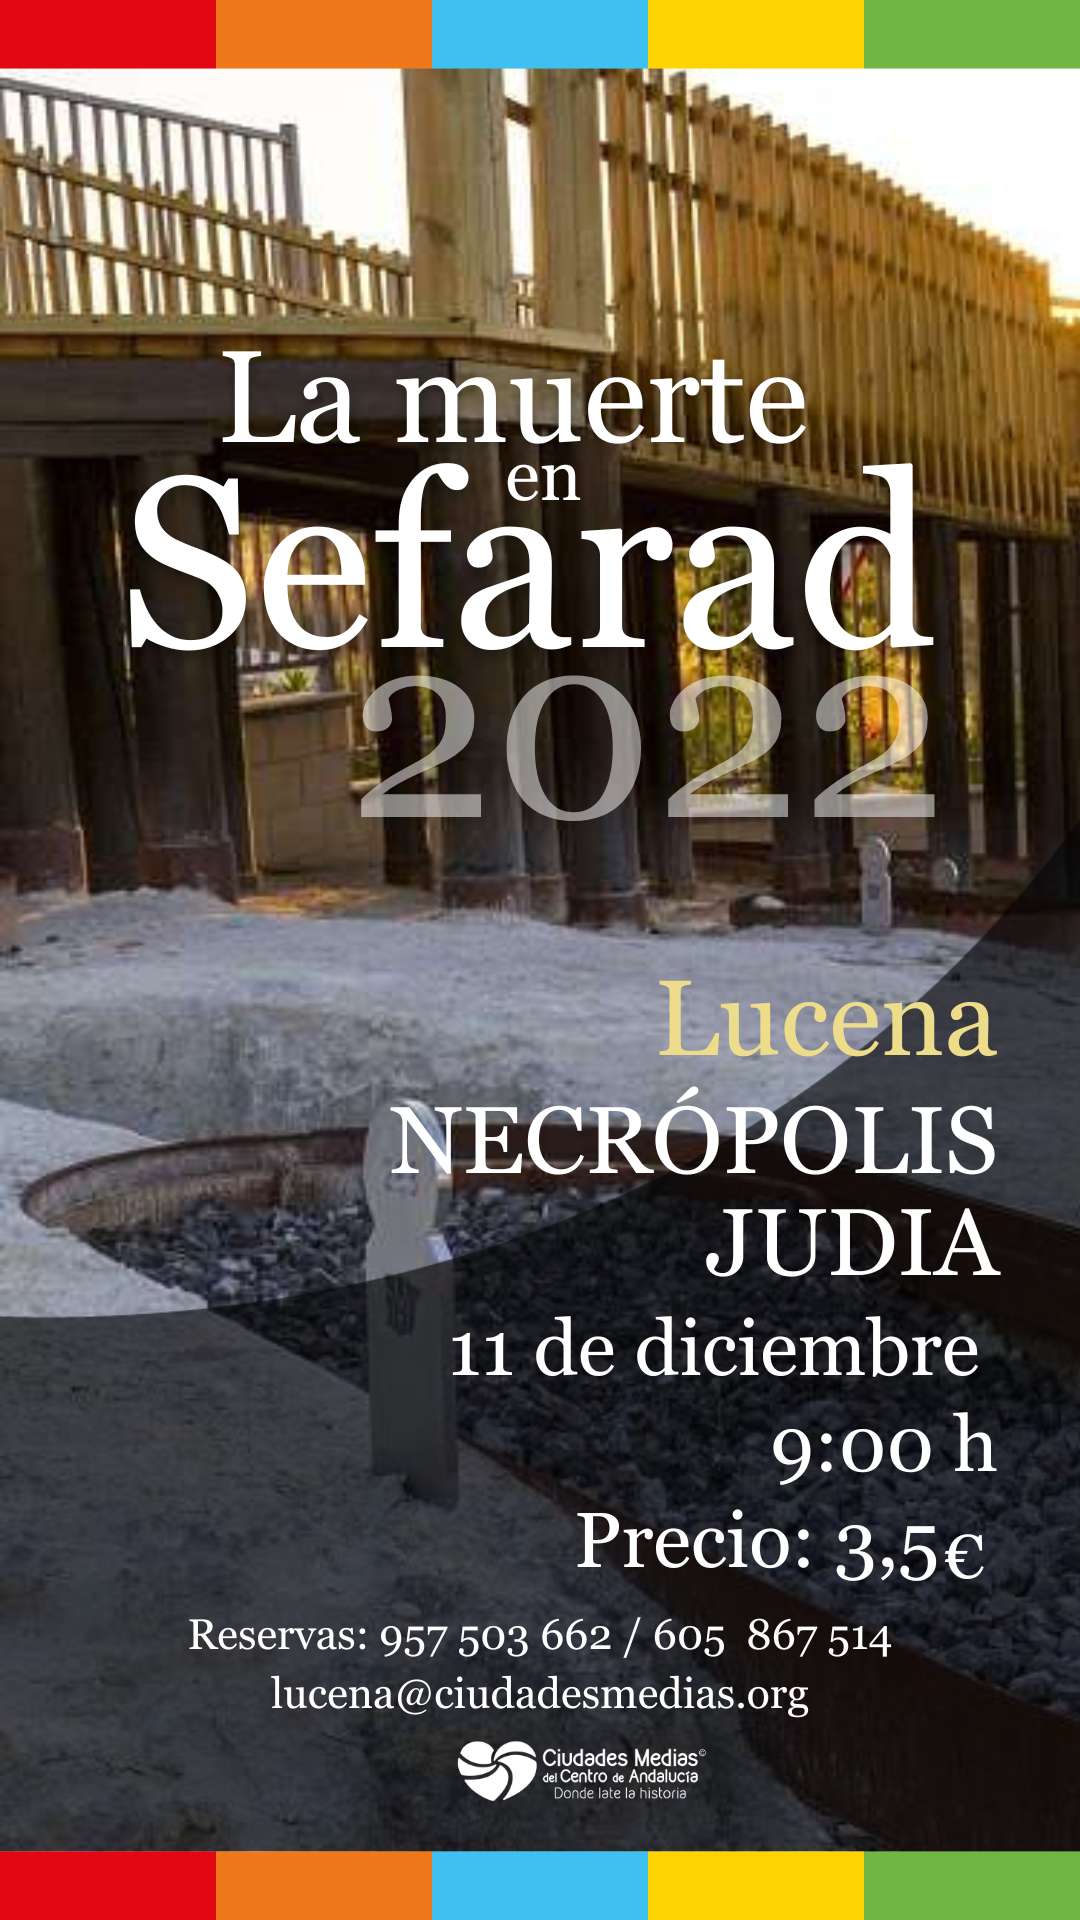 Visita a la Necrópolis judía de Lucena